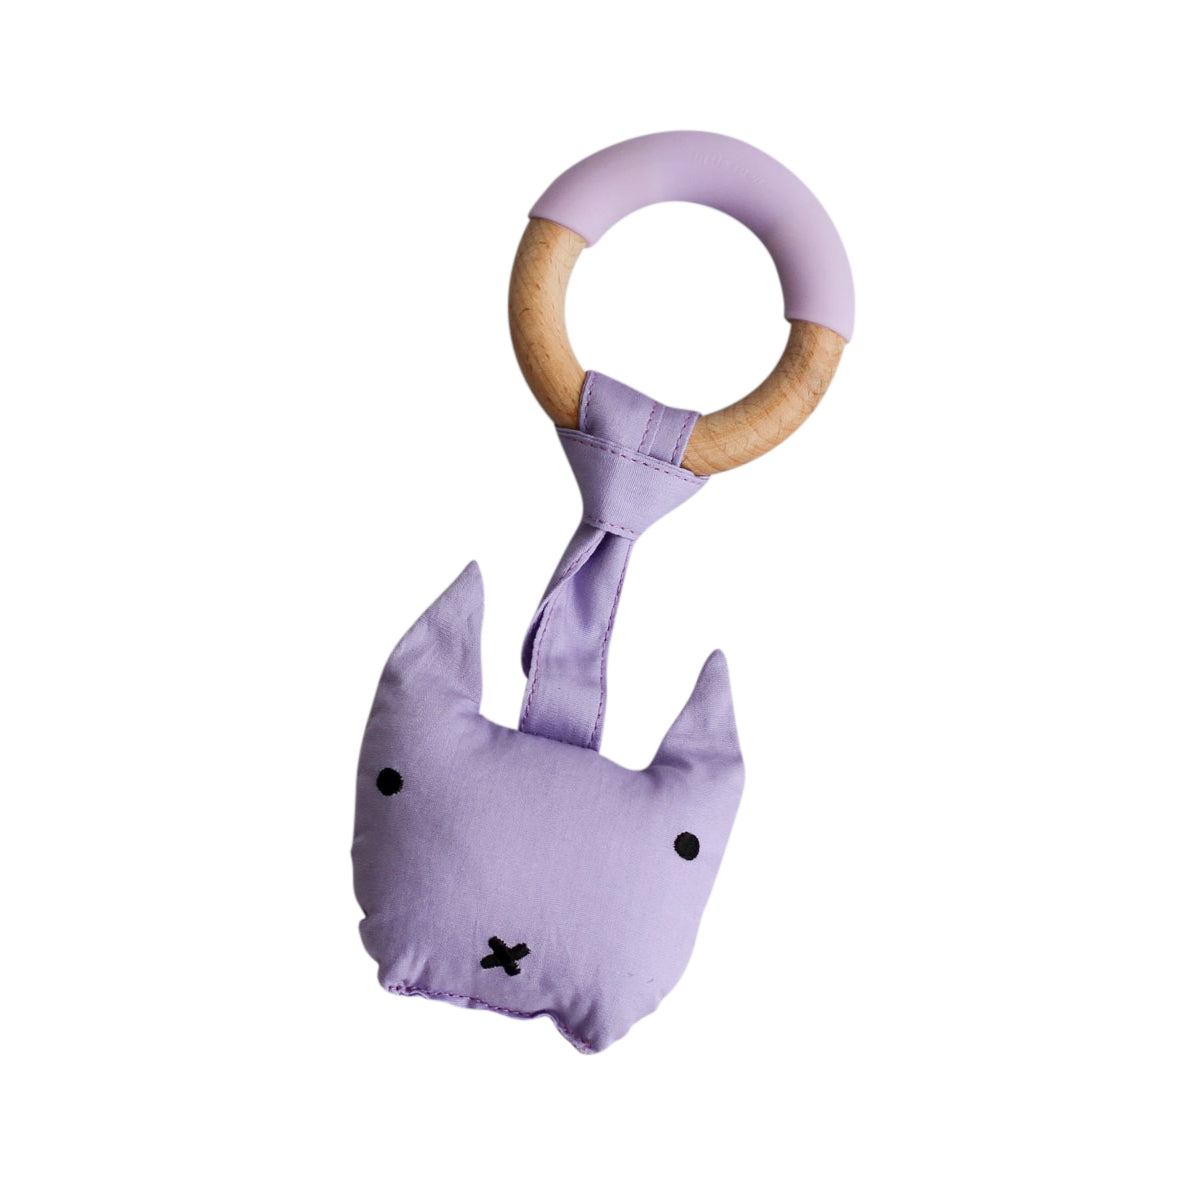 Wood Plush Rattle Teether Toy - Purple